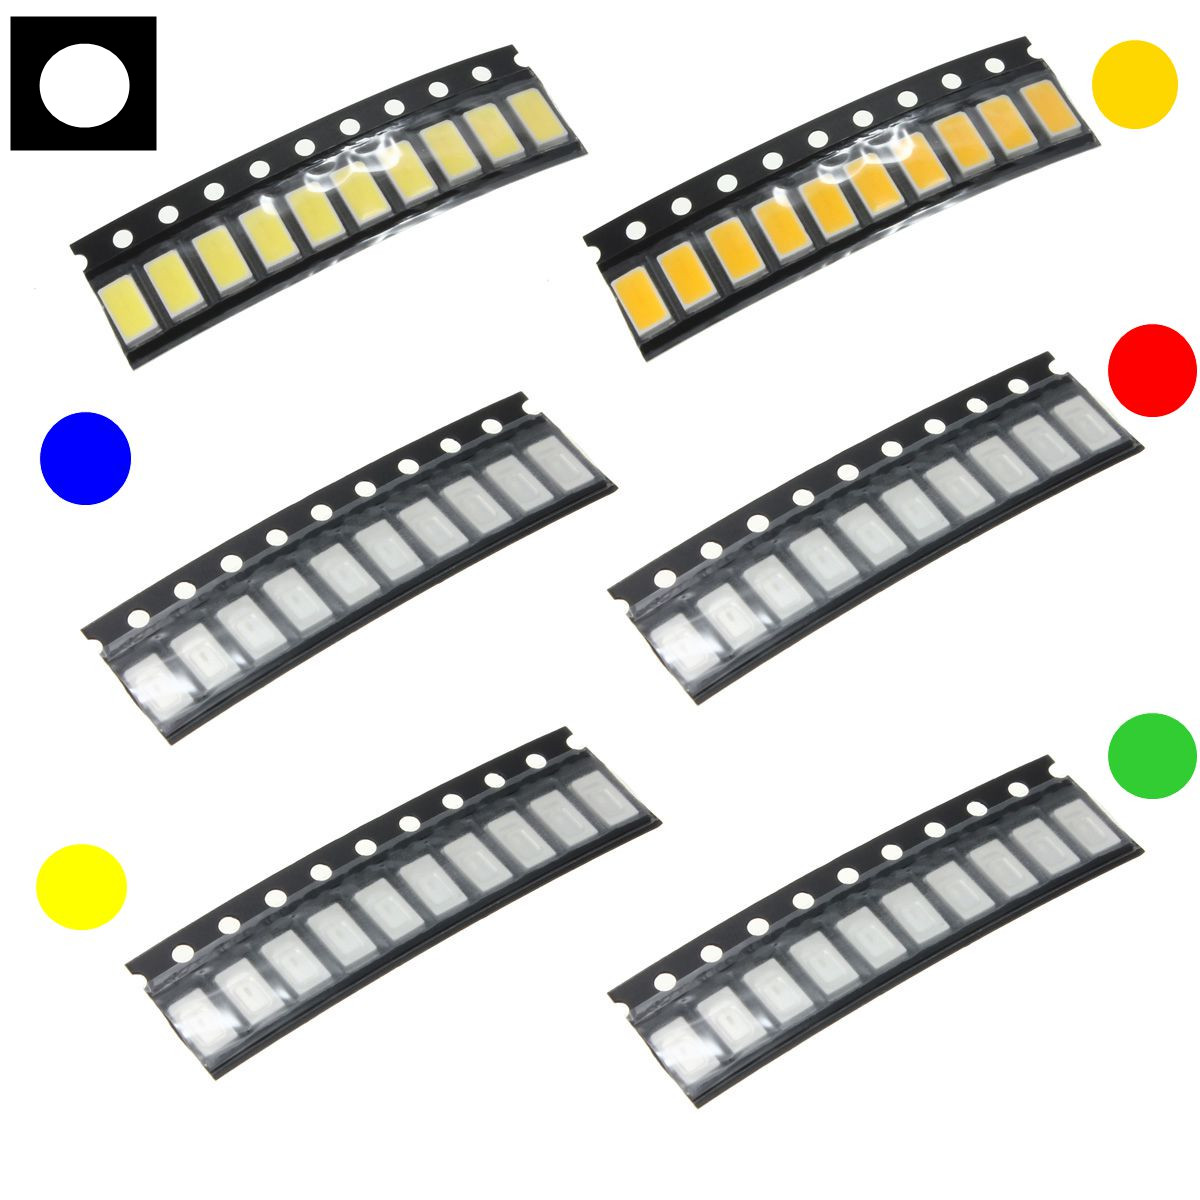 10-pcs-1206-Colorful-SMD-SMT-LED-Light-Lamp-Beads-For-Strip-Lights-979306-4